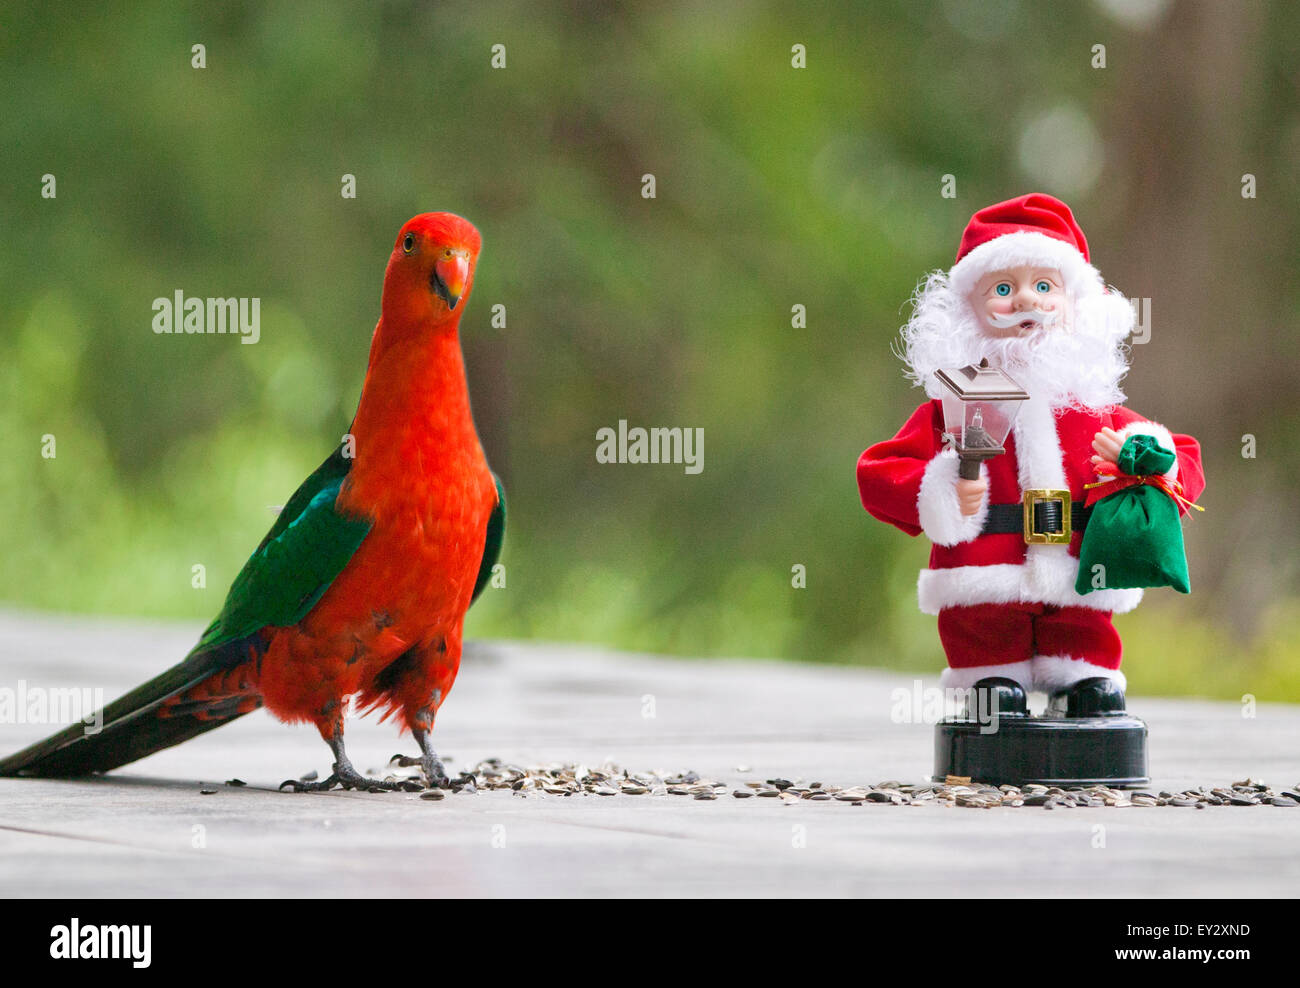 Santa and the Birds Stocking